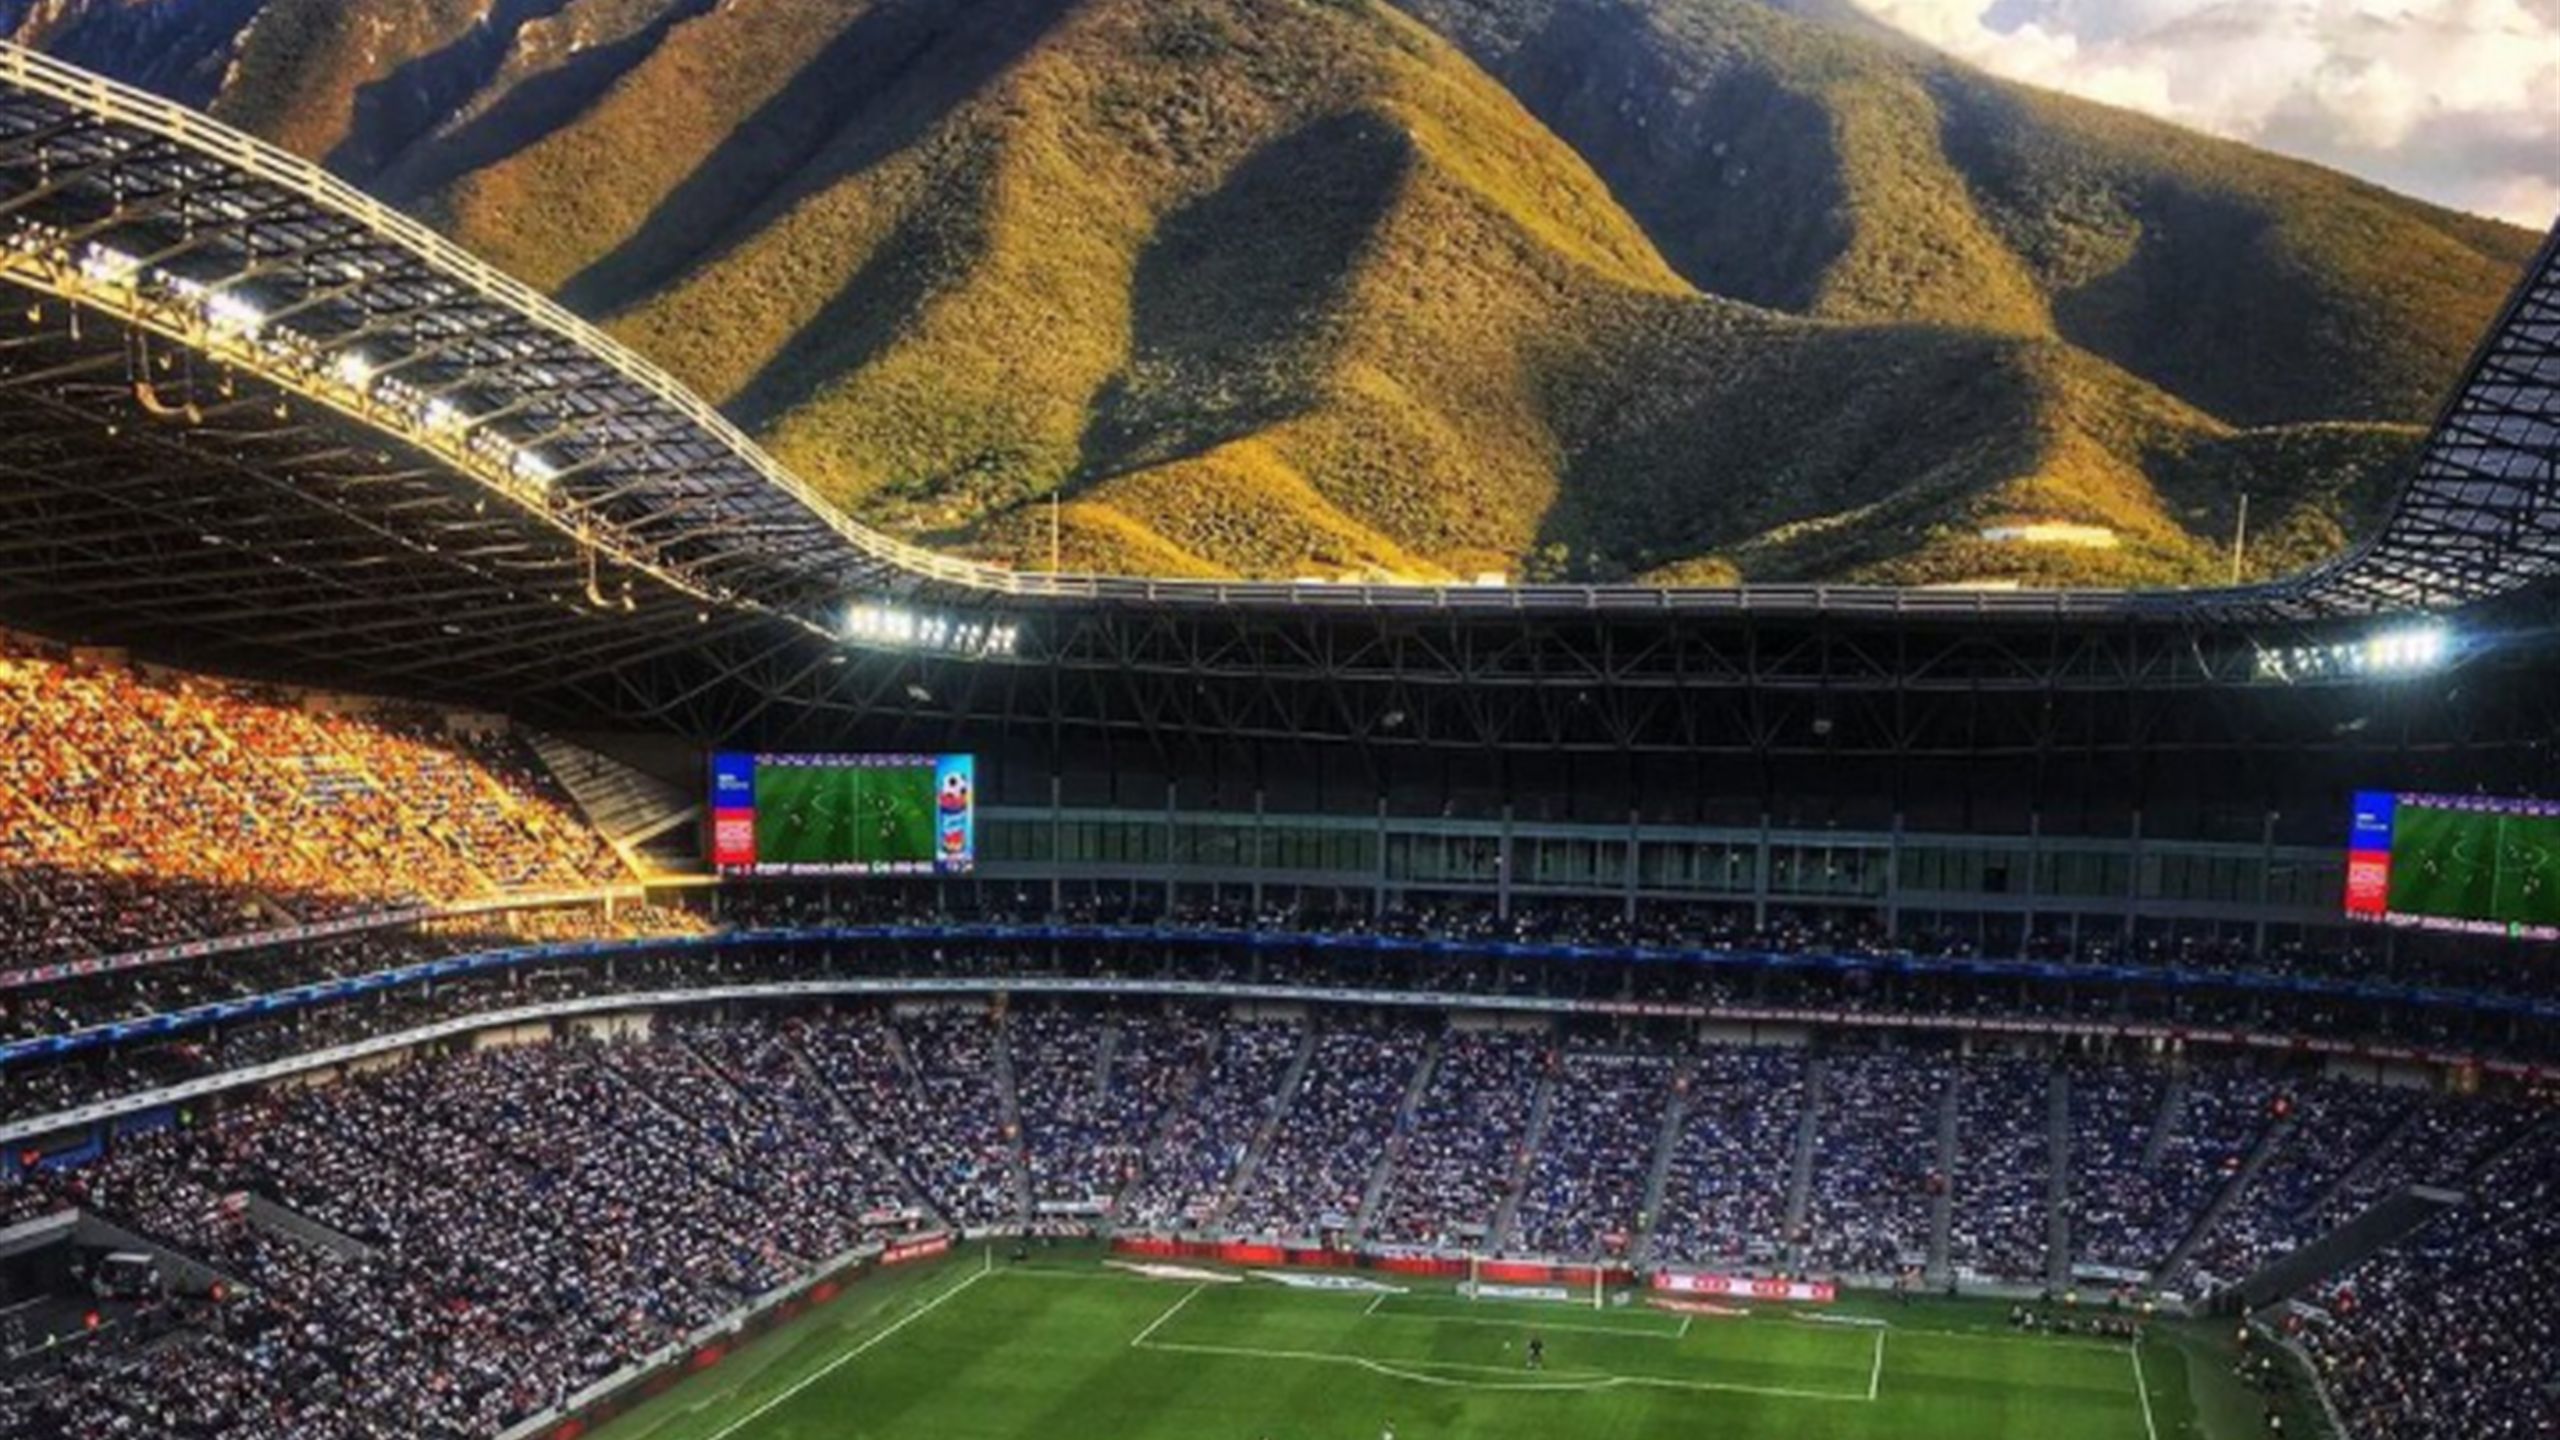 PICTURES Club de Fútbol Monterrey’s stadium is sensational Eurosport